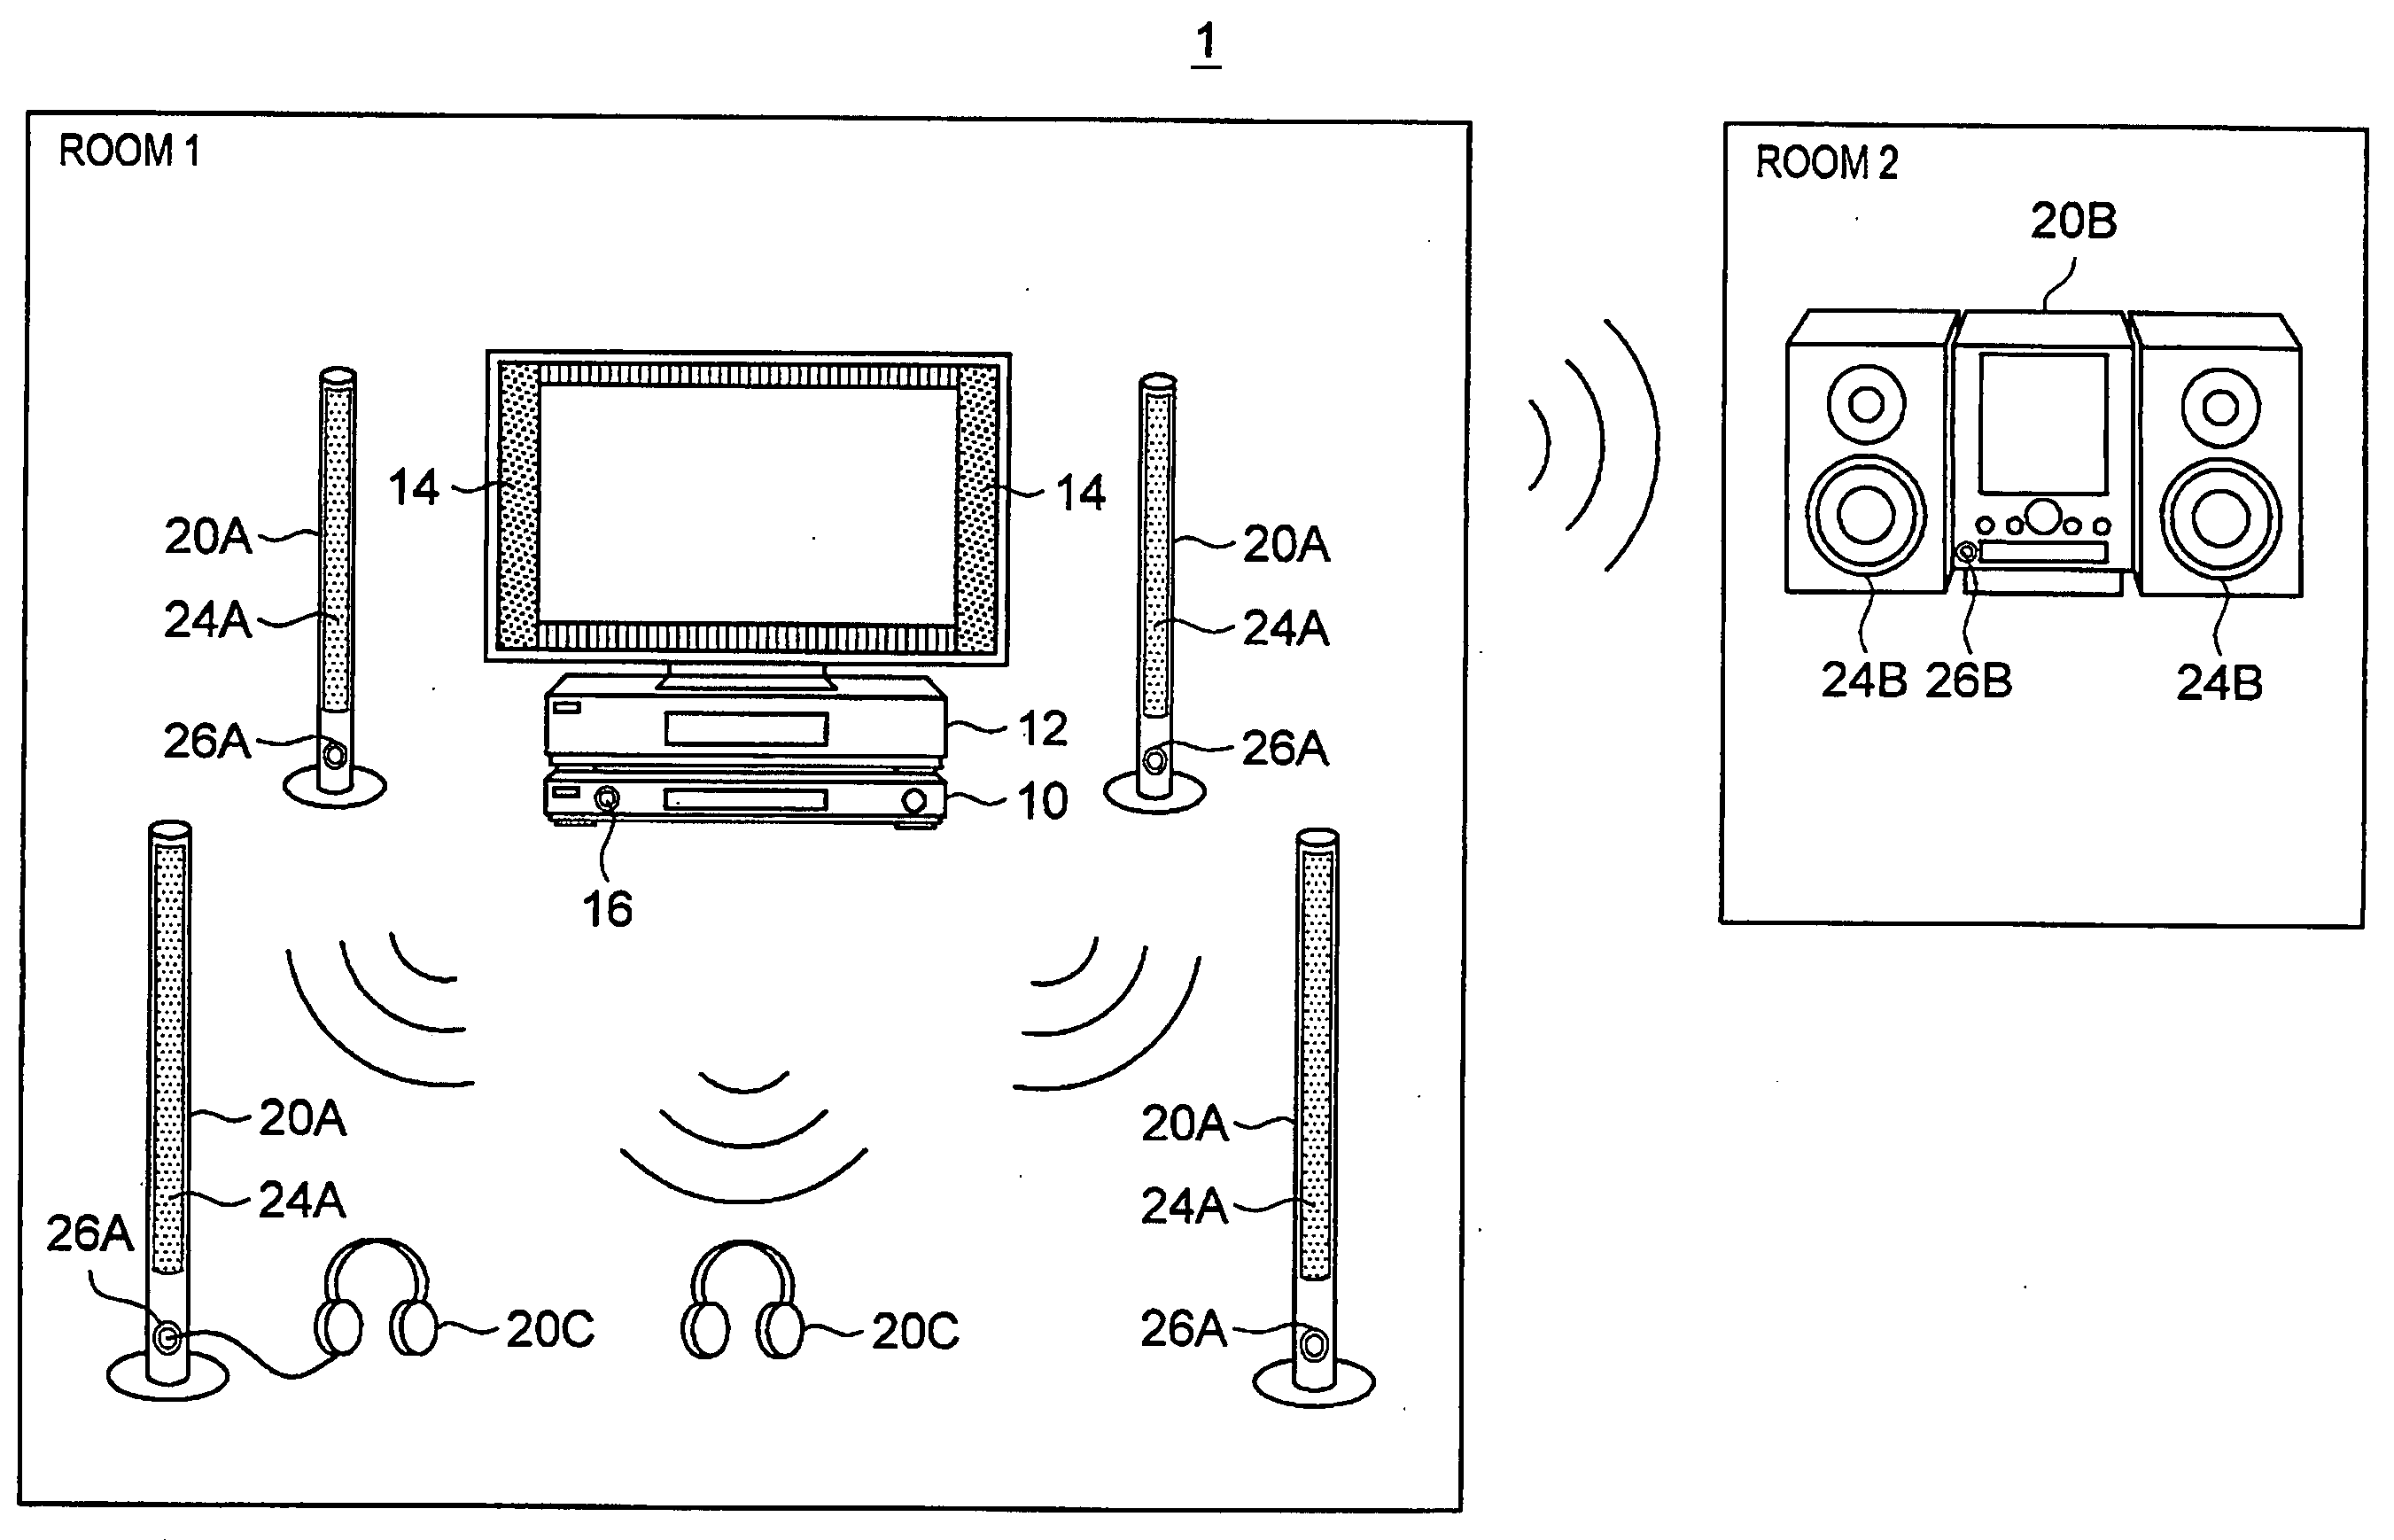 Audio signal transmitting apparatus, audio signal receiving apparatus, audio signal transmission system, audio signal transmission method, and program